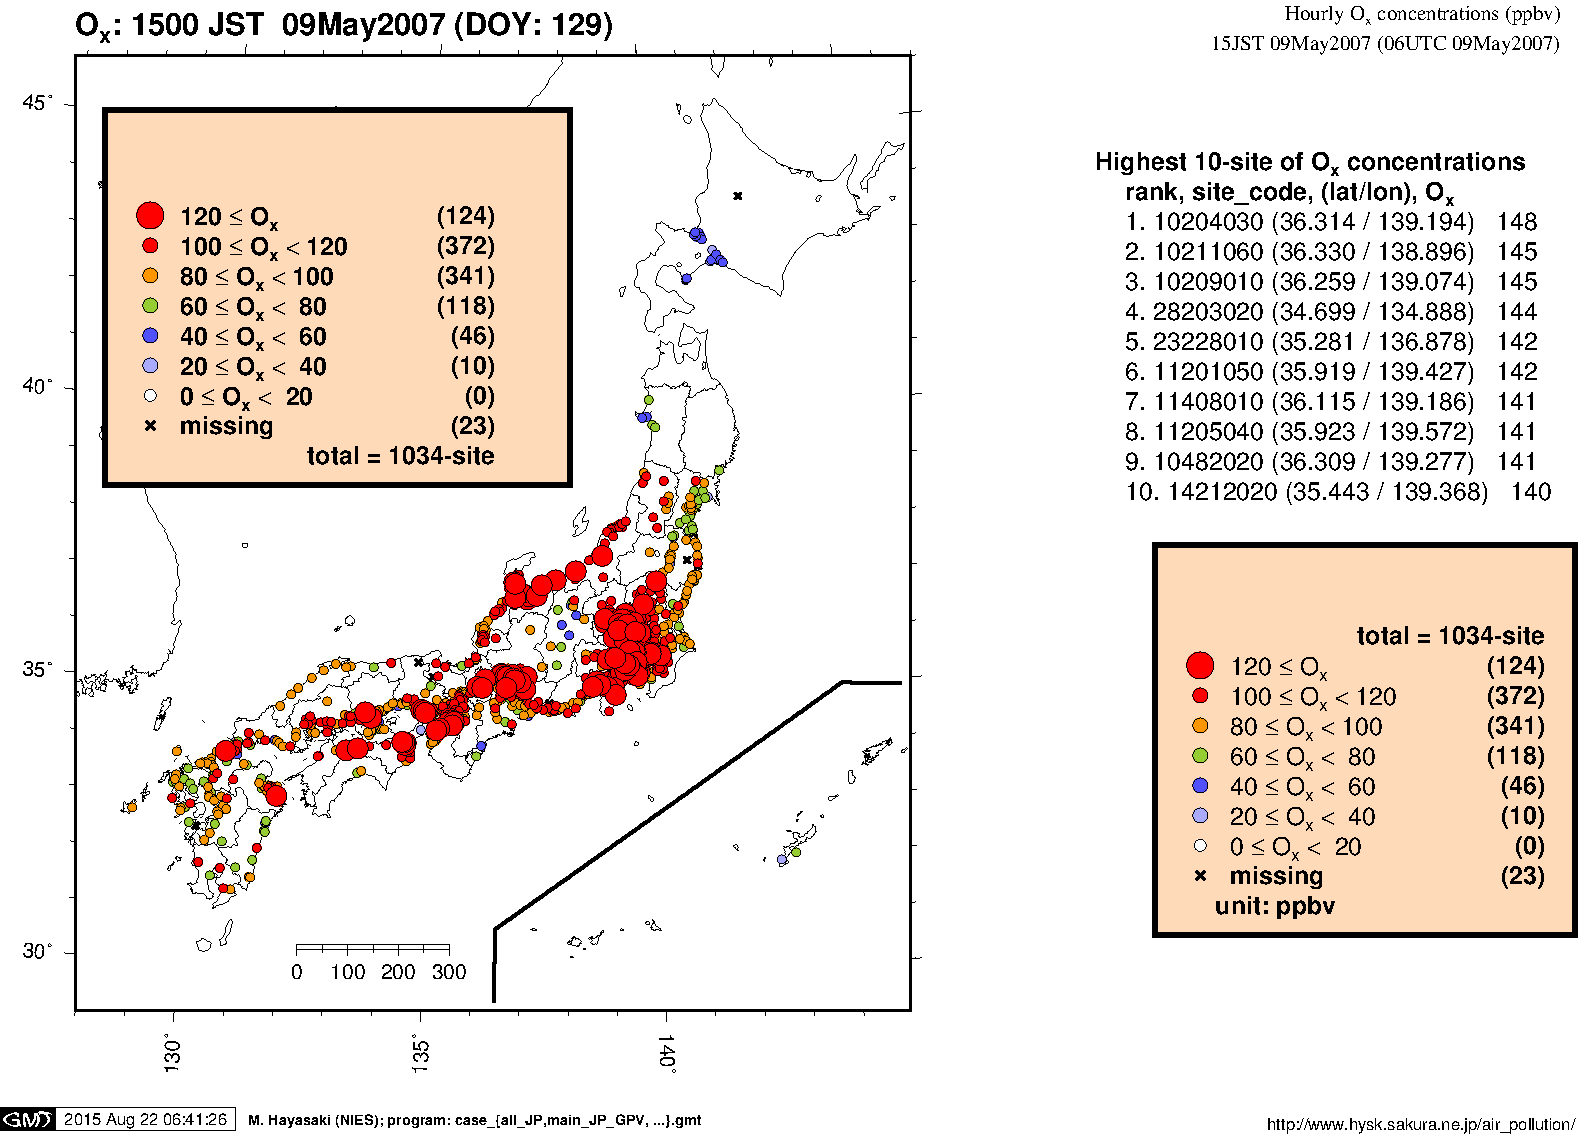 Ox concentration in Japan (15JST 09Mar2007)